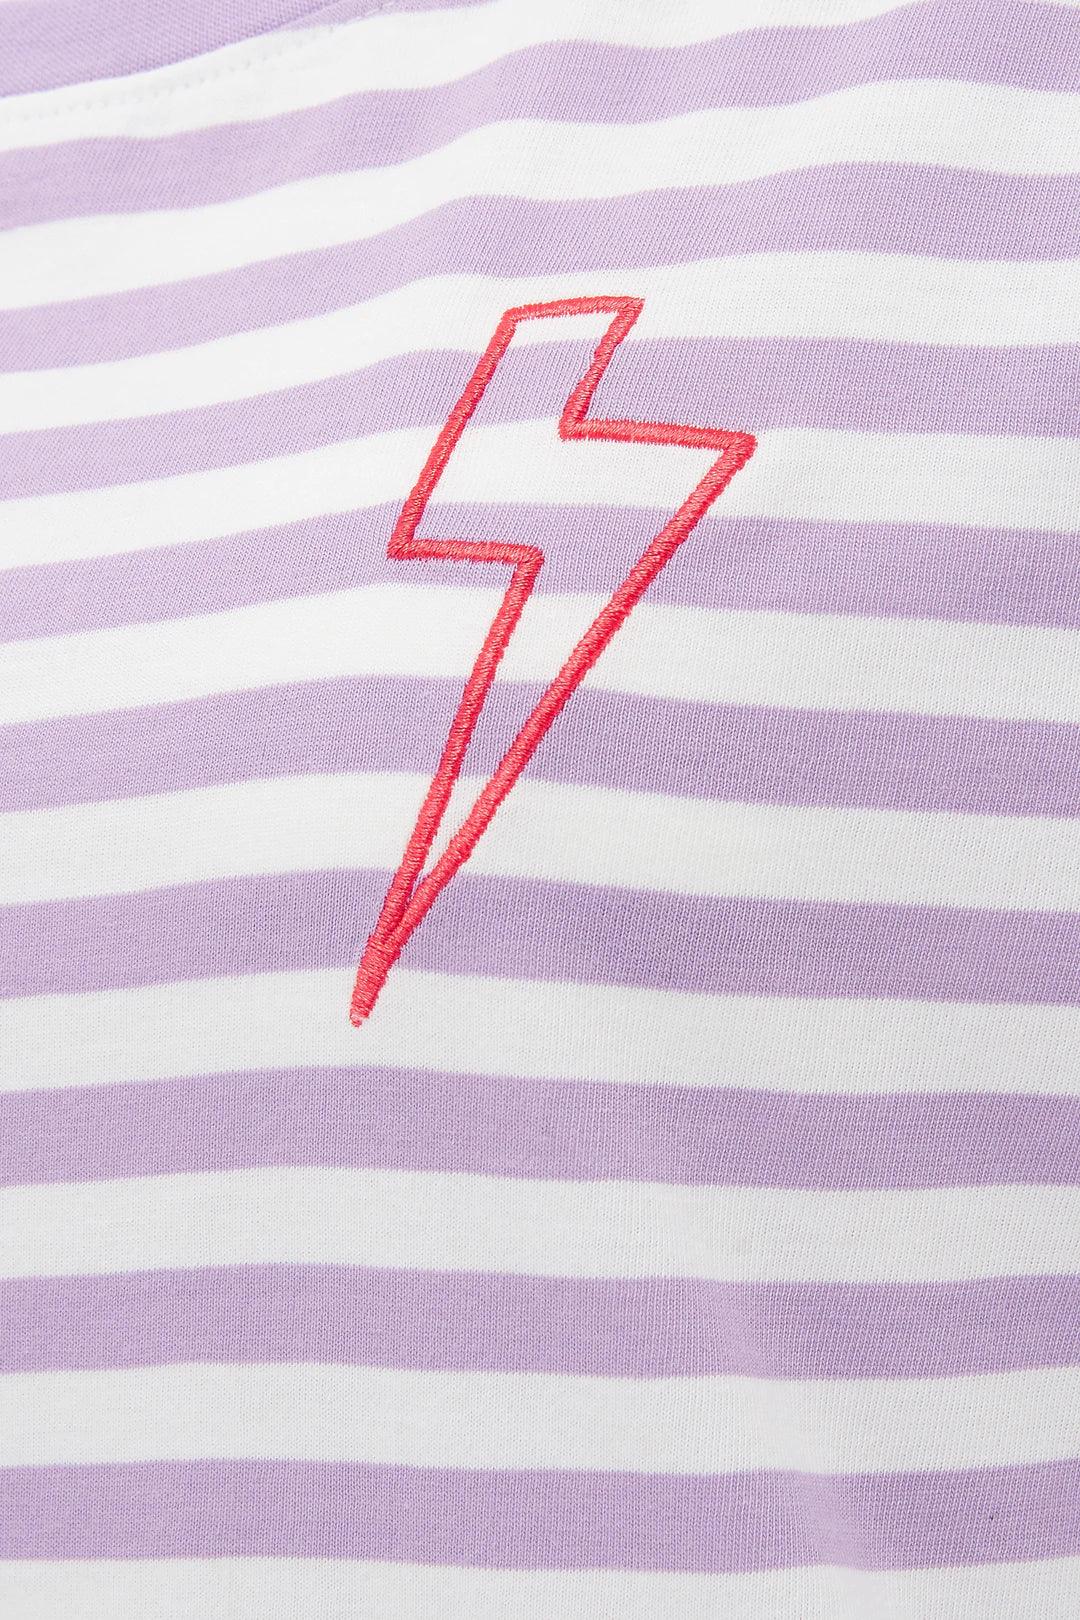 Camiseta Maggie Lilac off-white Stripe Lightning - ECRU